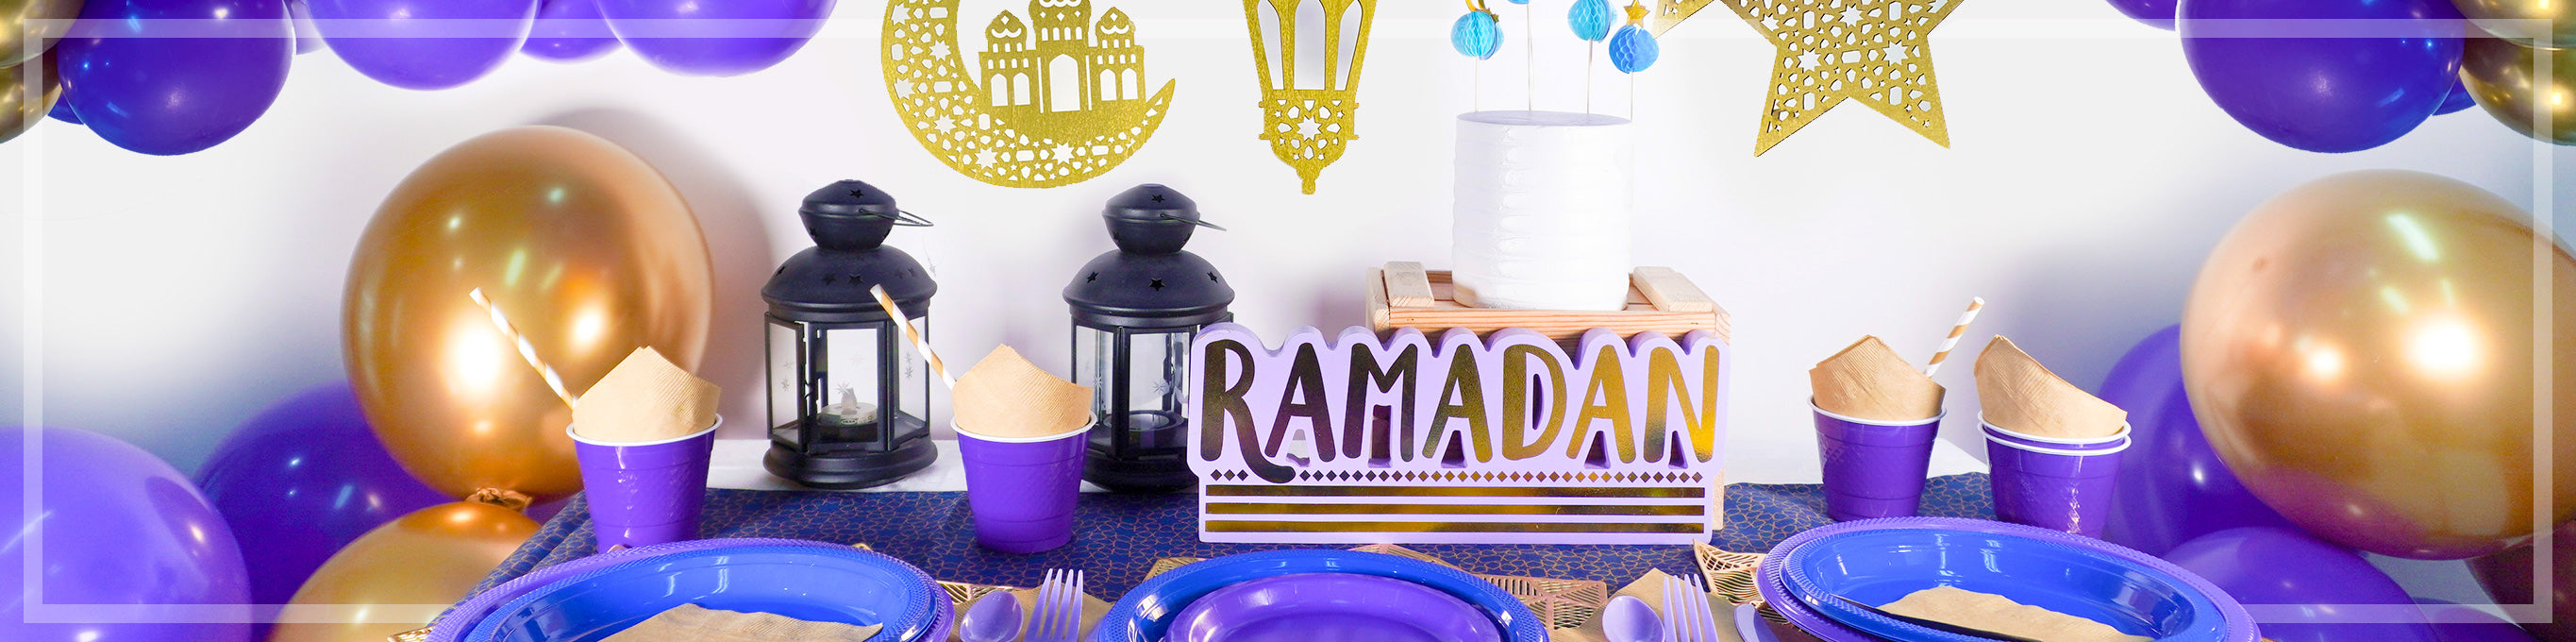 Ramadan Party Decoration Supplies